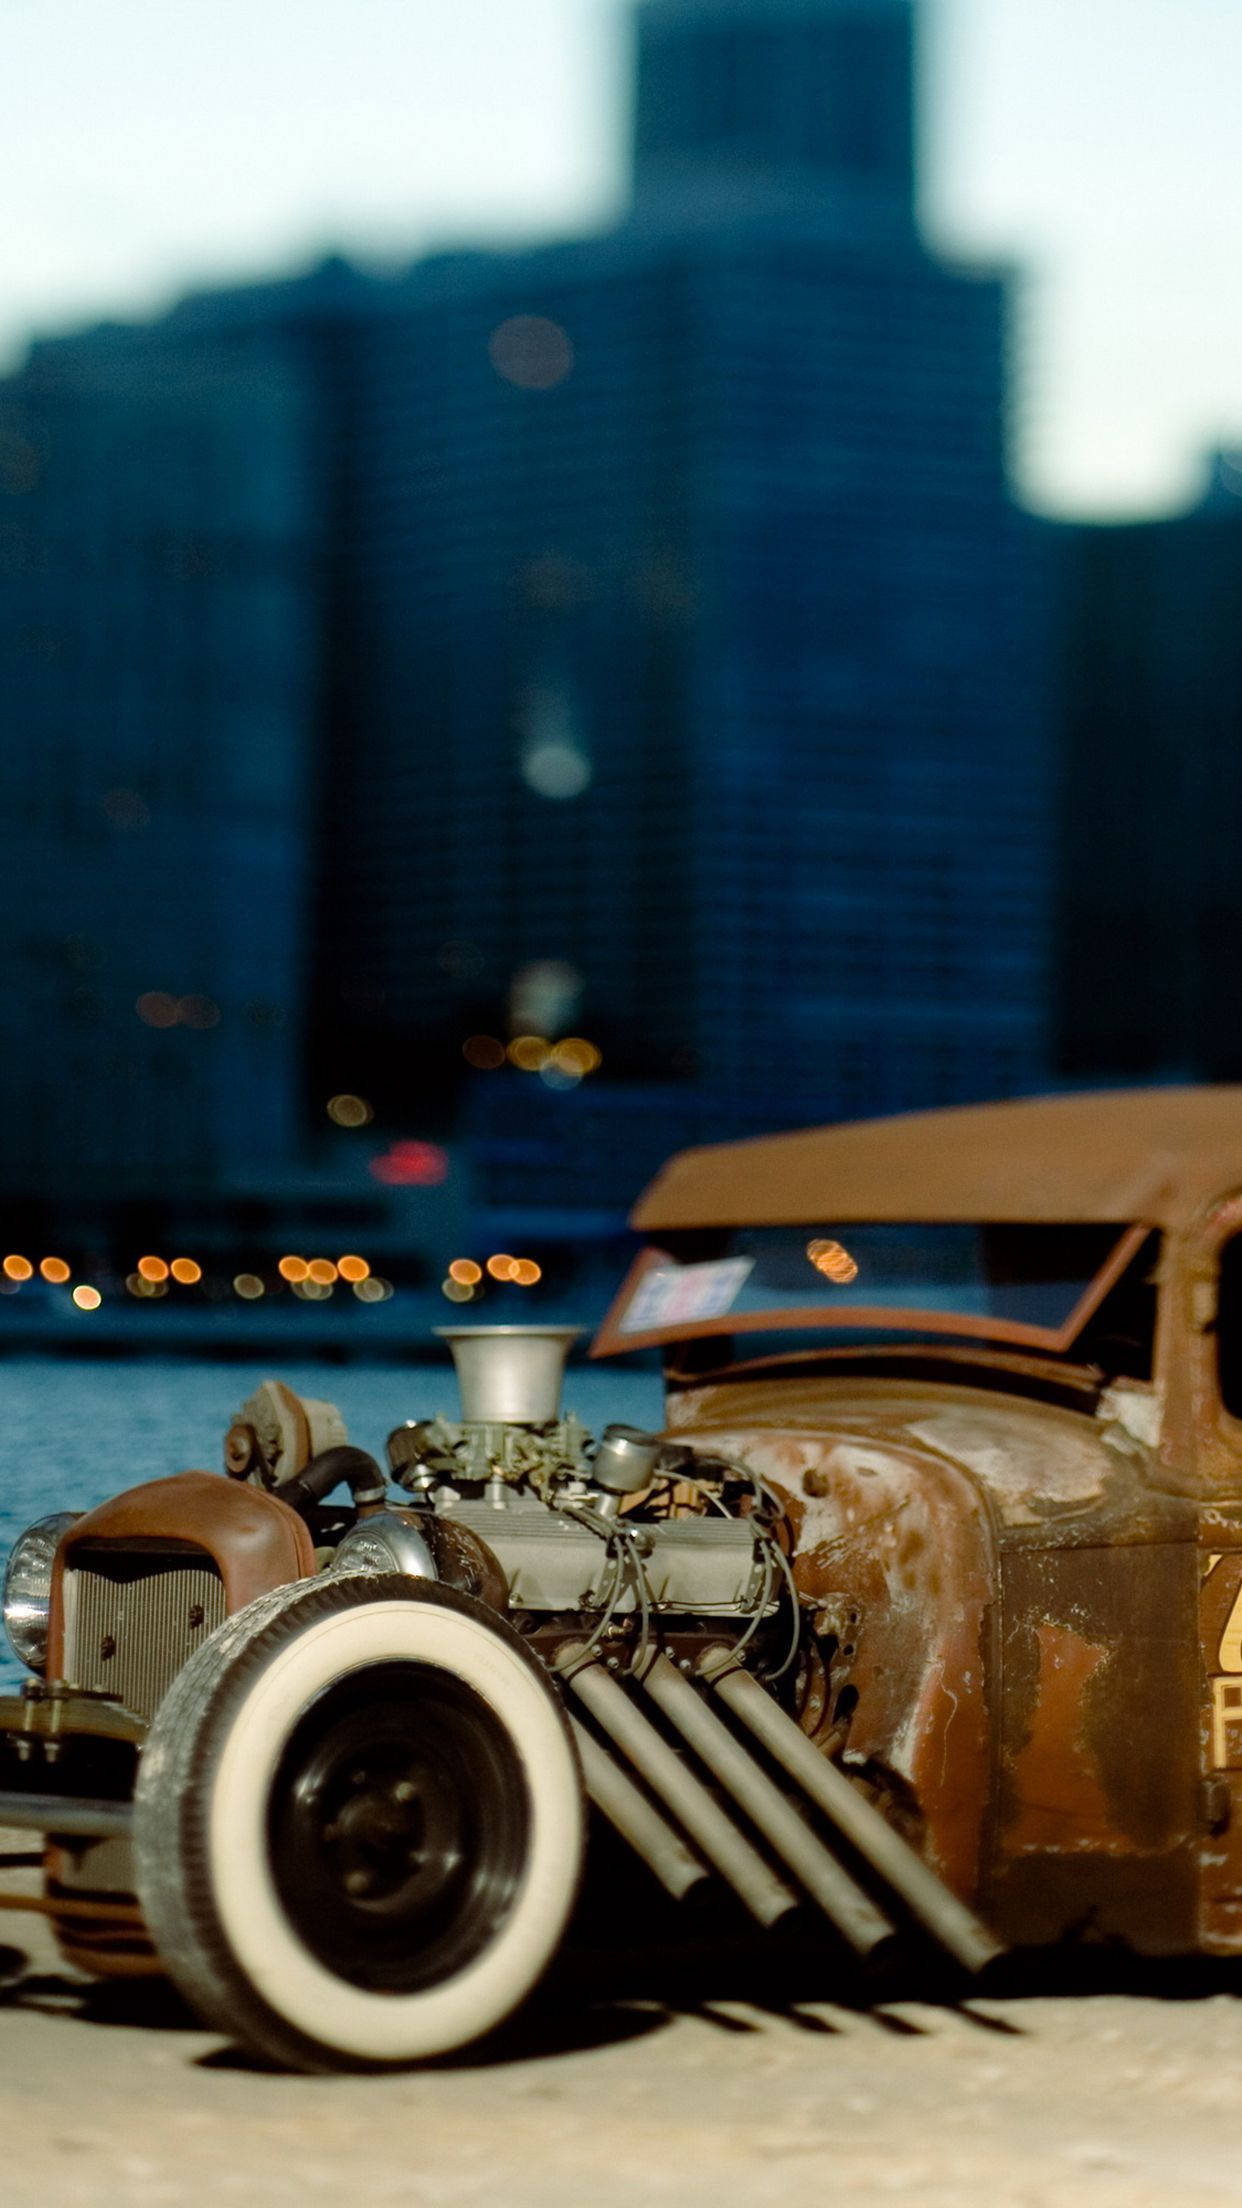 Caption: Vintage Rat Rod Car In City Sunset Wallpaper